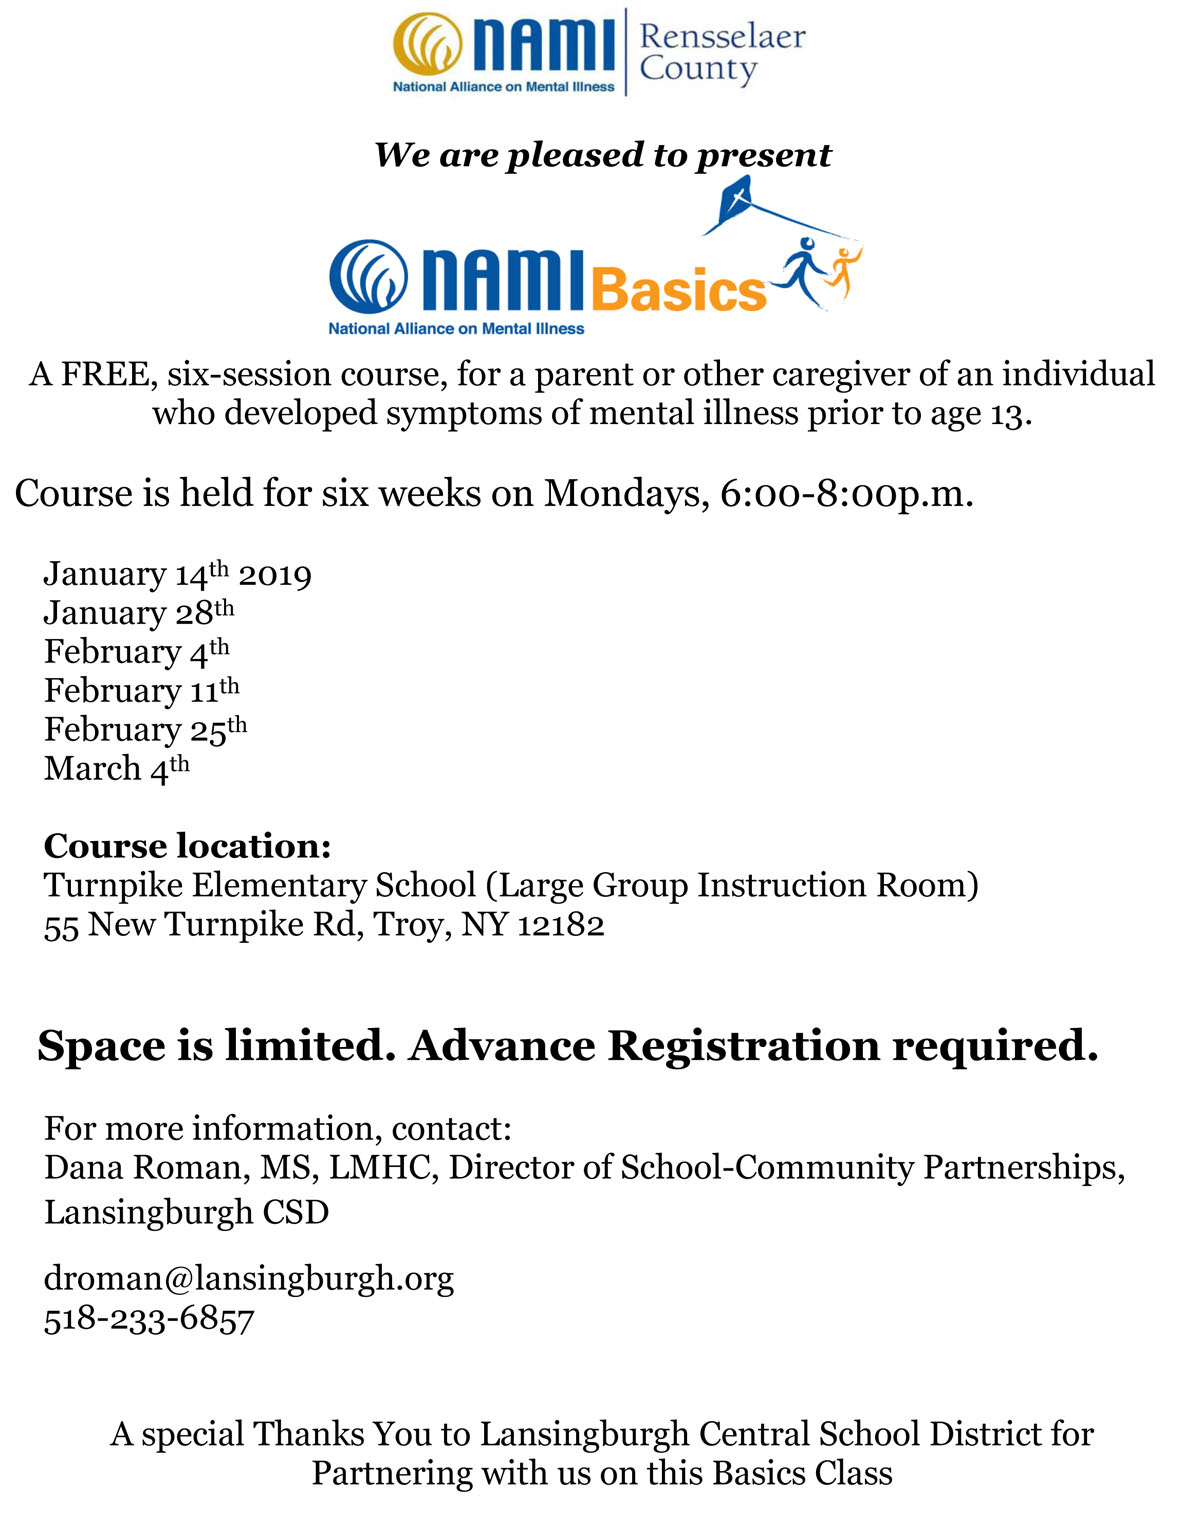 NAMI Basics Course flyer